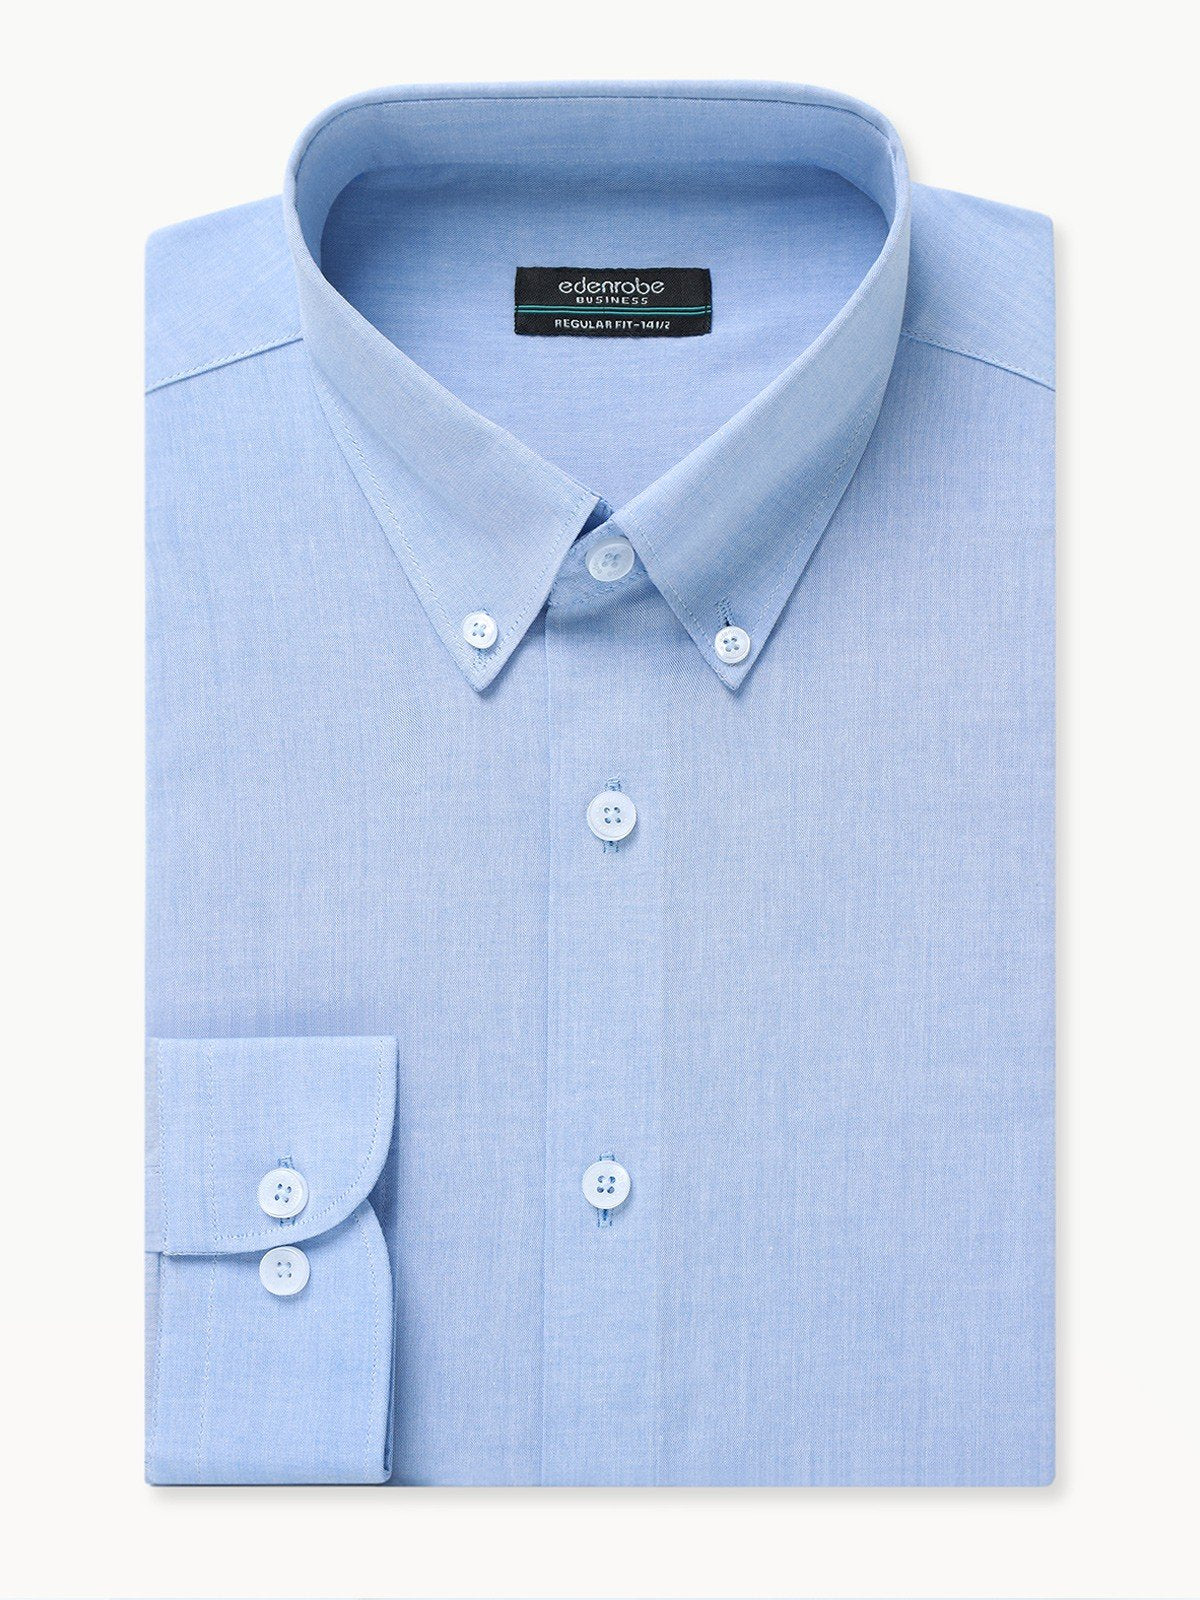 Men's Sky Blue Shirt Plain - EMTSB22-130